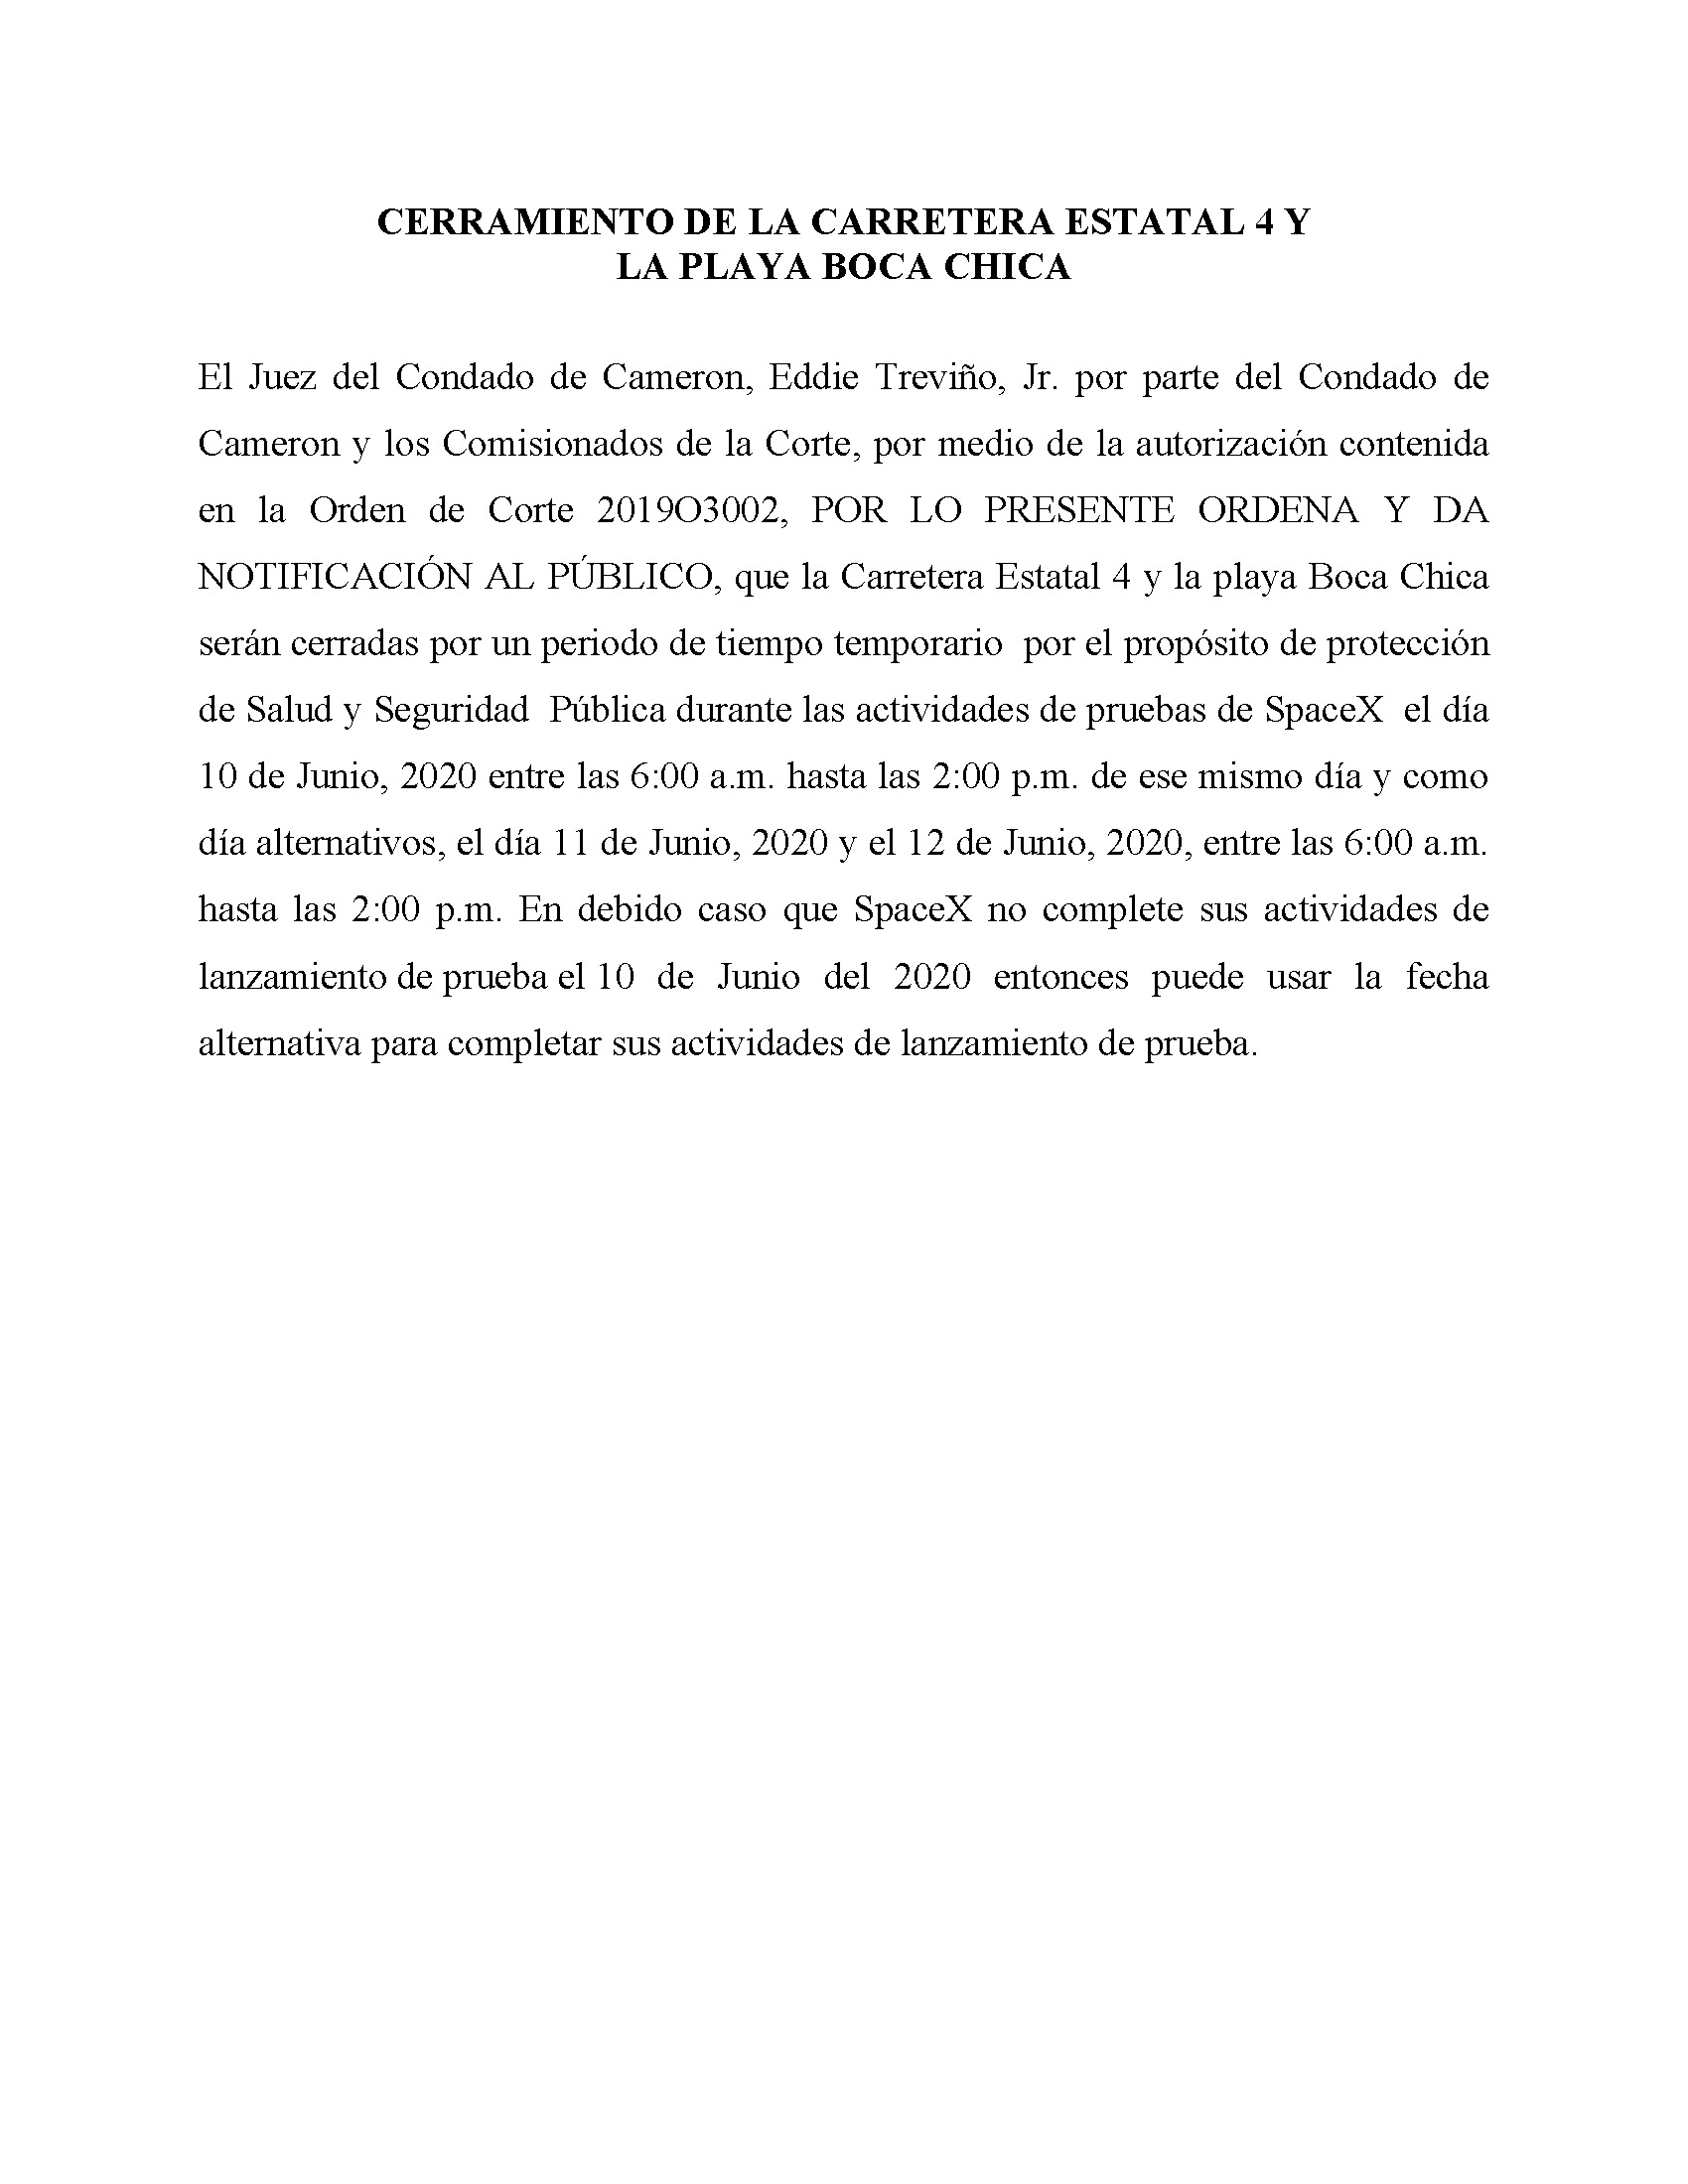 ORDER.CLOSURE OF HIGHWAY 4 Y LA PLAYA BOCA CHICA.SPANISH.06.10.20